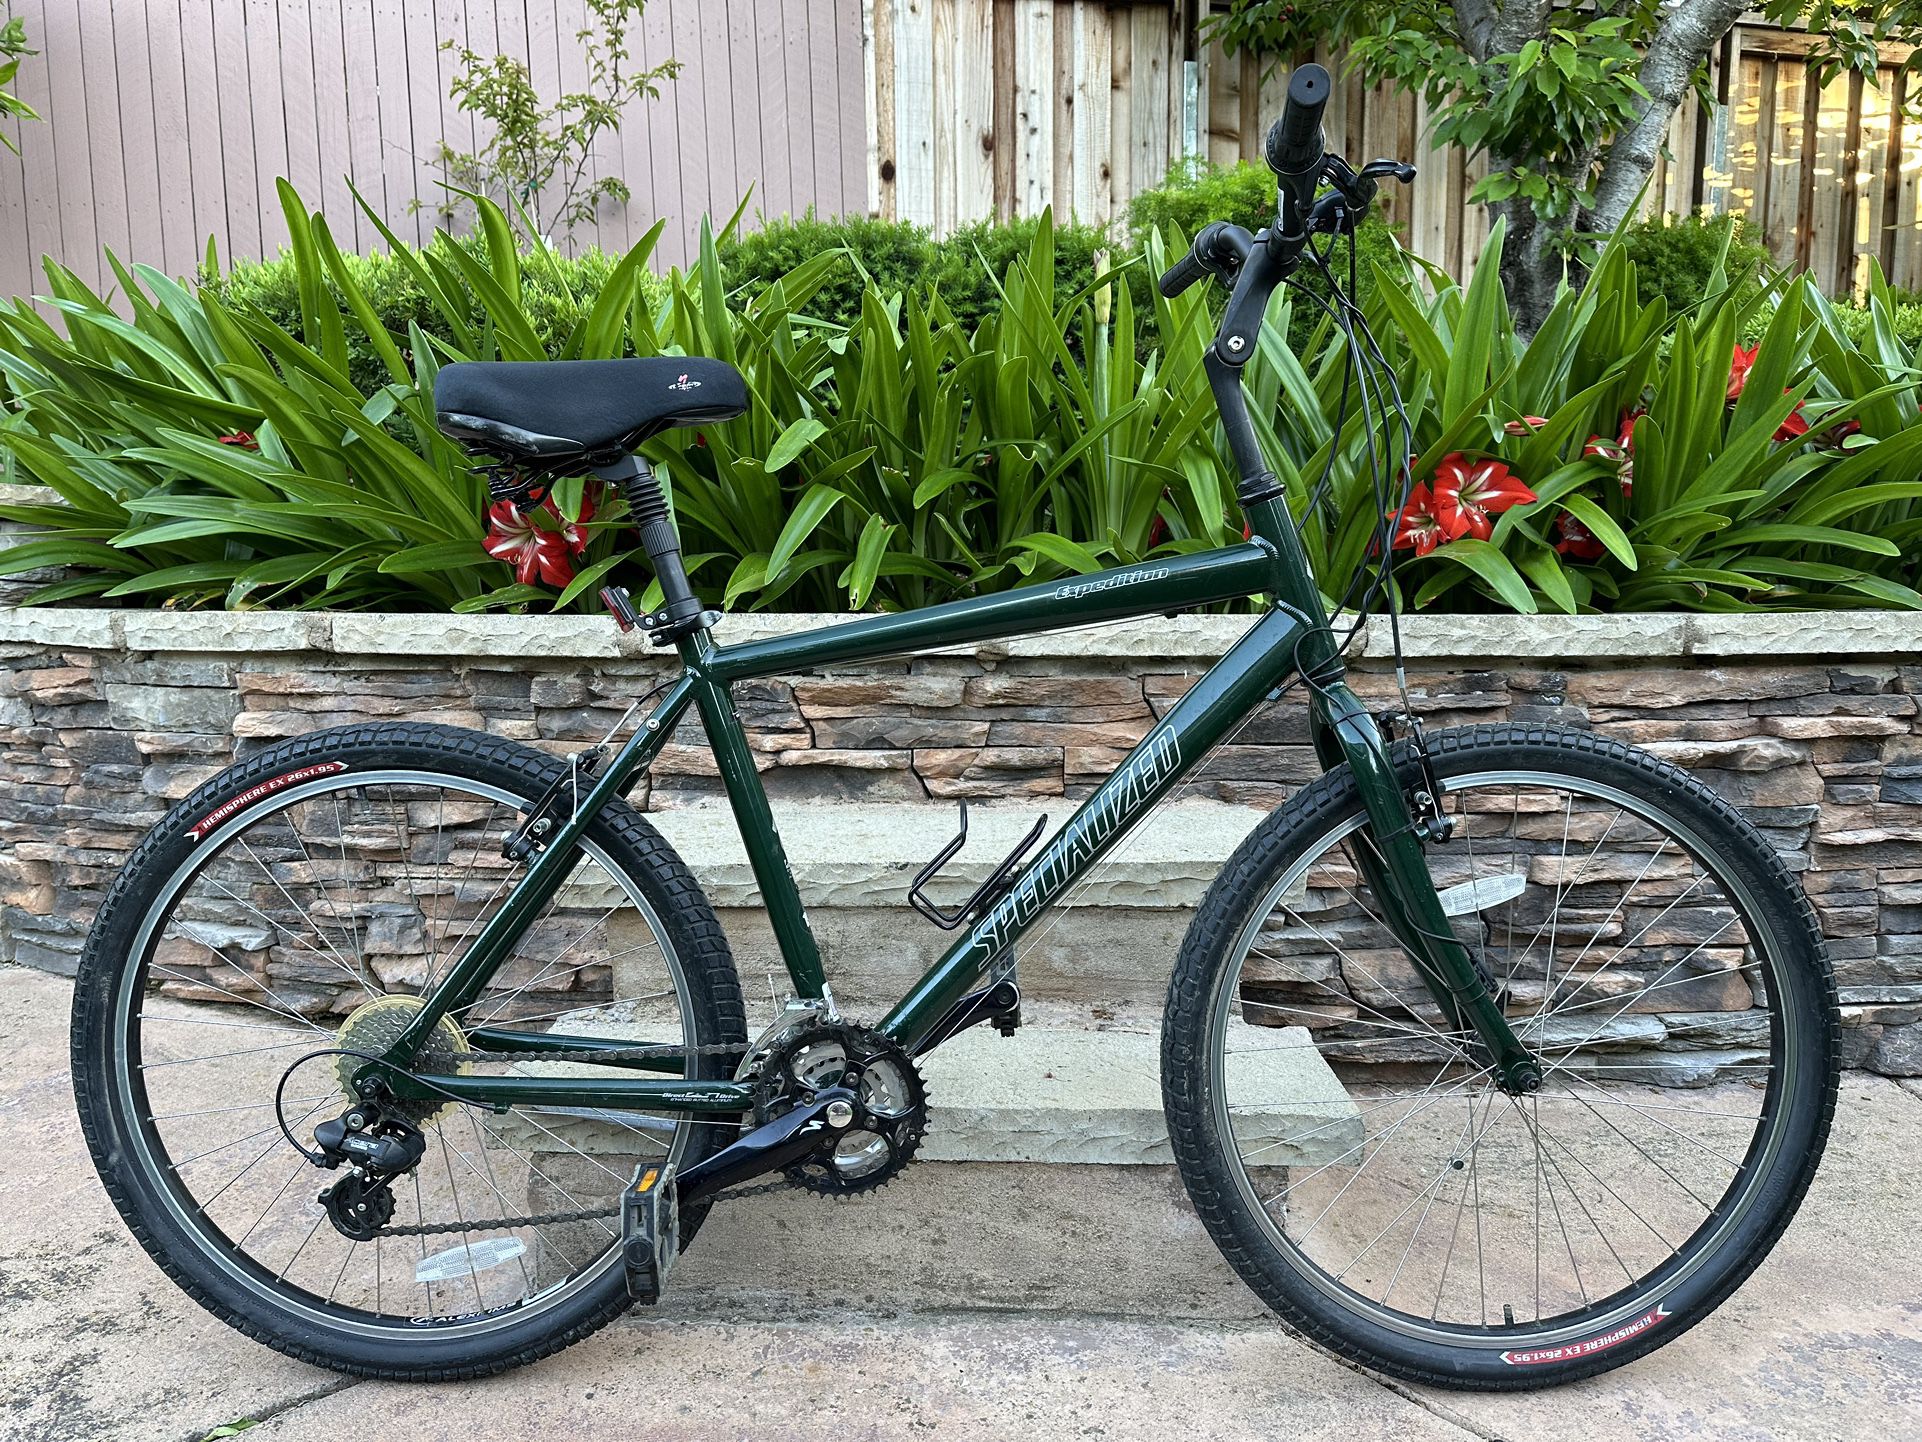 Specialized Expedition Hybrid Bike